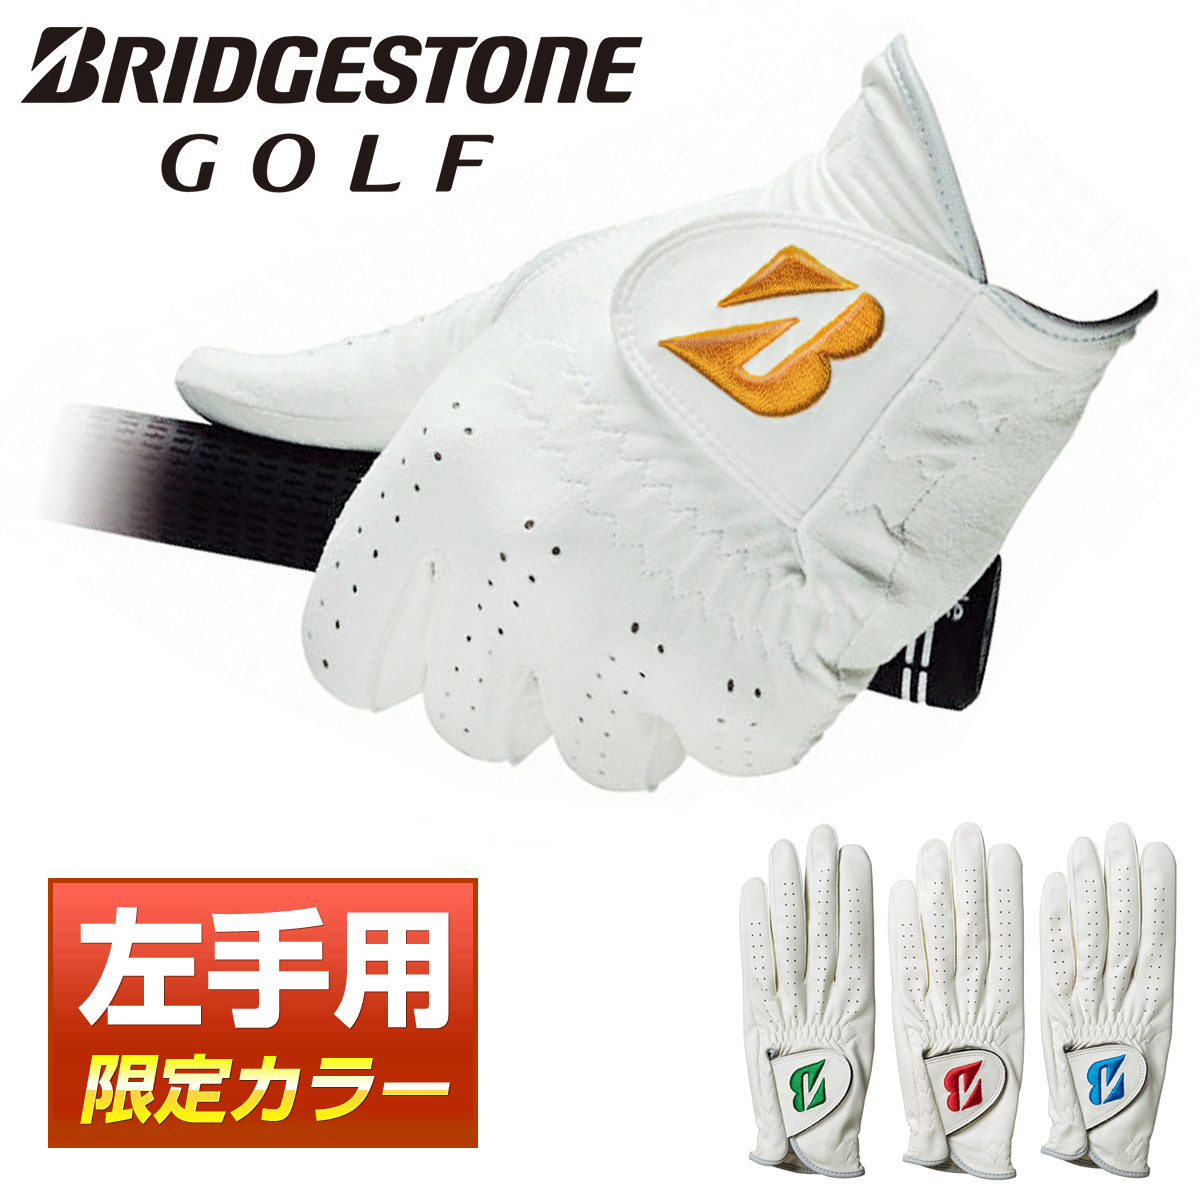 BRIDGESTONE GOLF ブリヂストンゴルフ日本正規品 TOUR GLOVE ショート